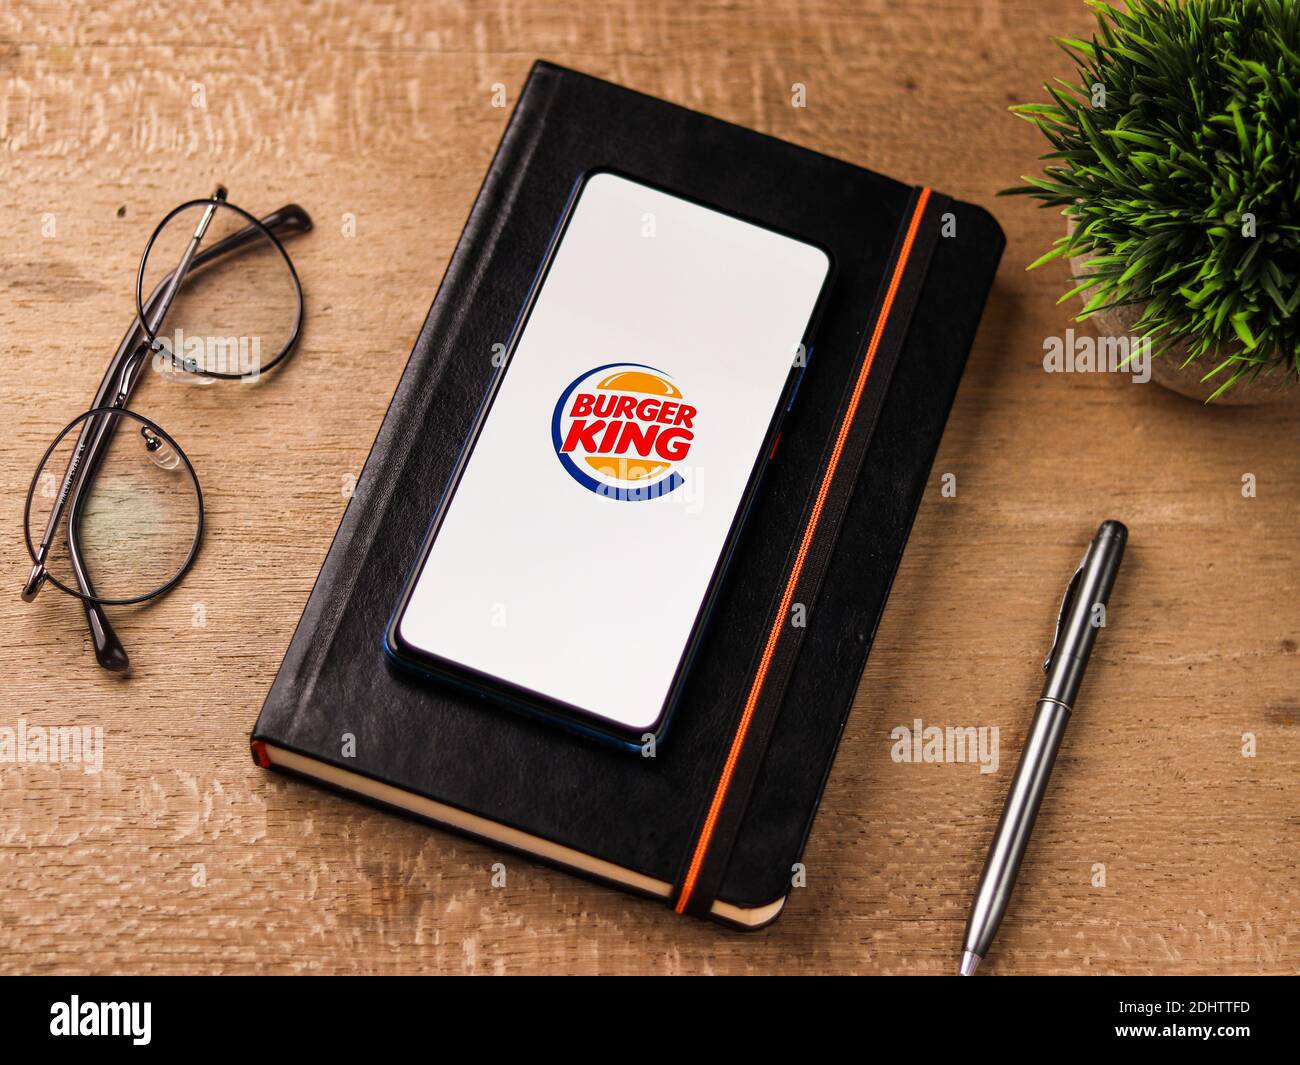 Assam, india - December 20, 2020 : Burger King logo on phone screen stock image. Stock Photo